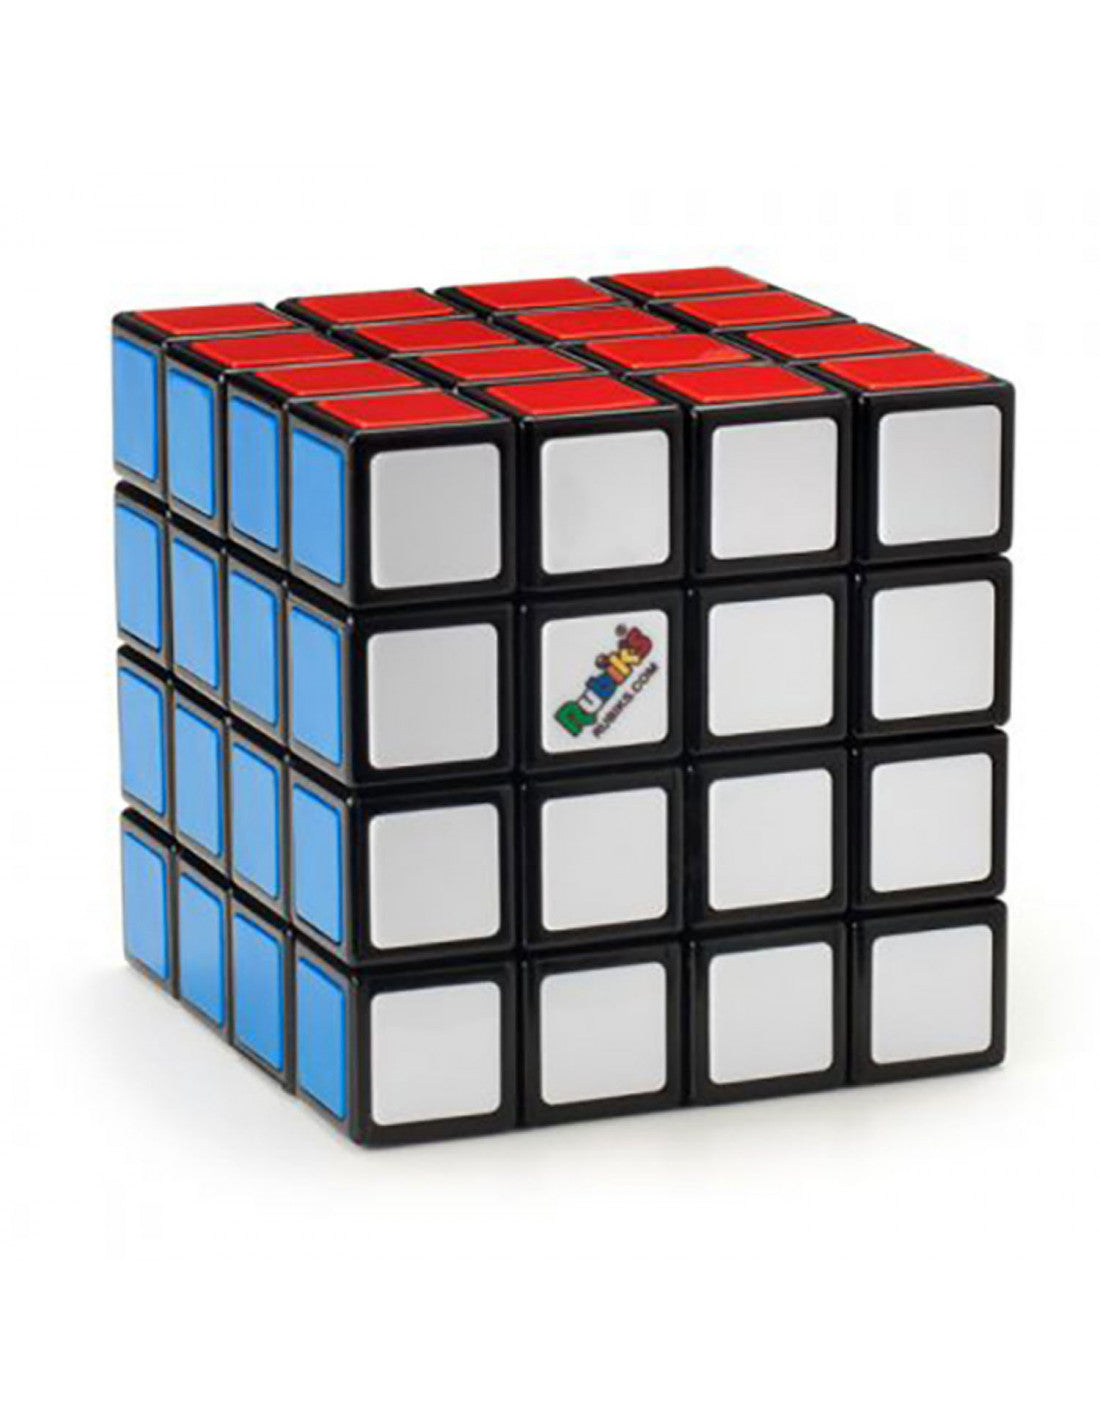 4x4 Master - Rubik's Cube